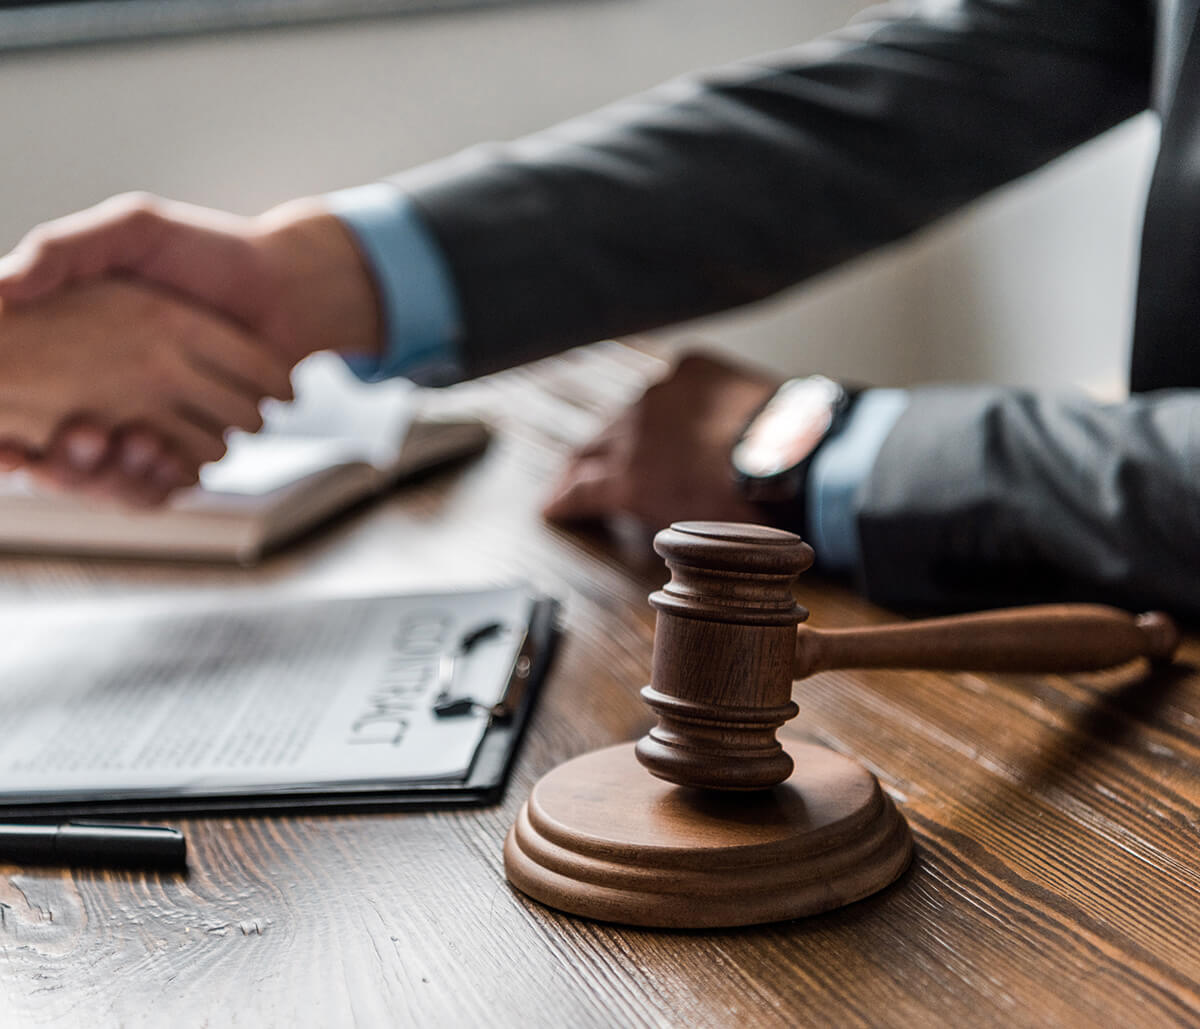 Mississauga Legal Services - Affordable Lawyer - Civil litigation